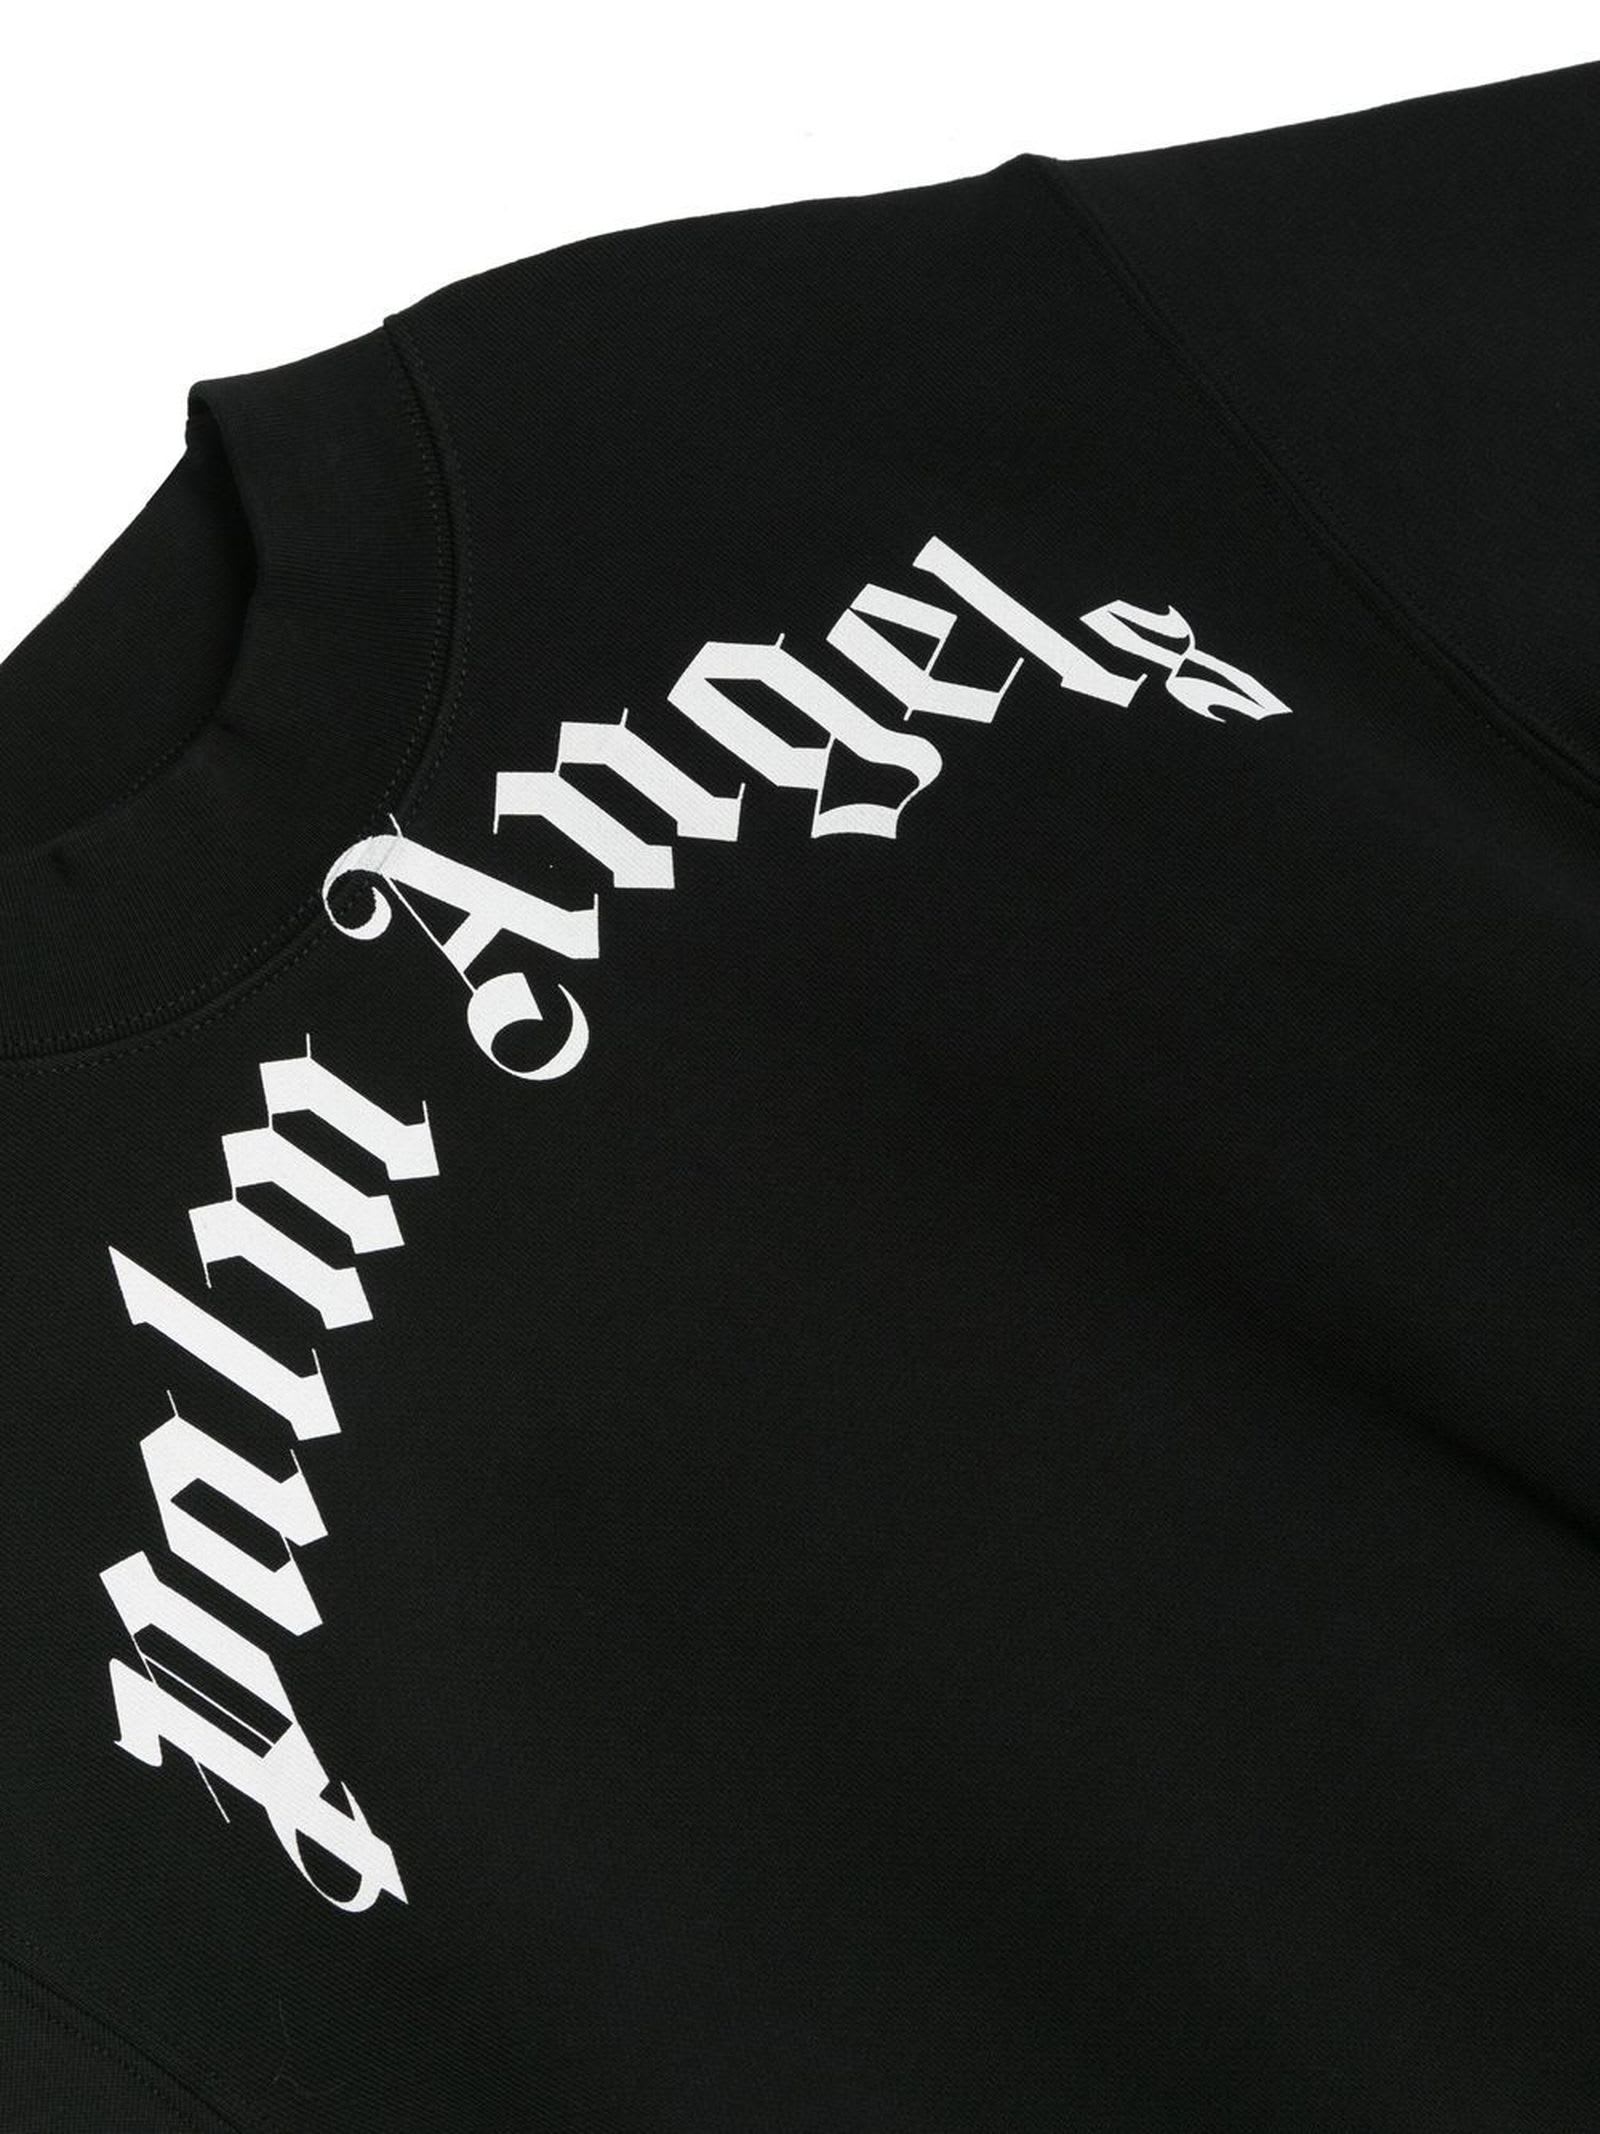 Shop Palm Angels Black Cotton Sweatshirt In Black Whit